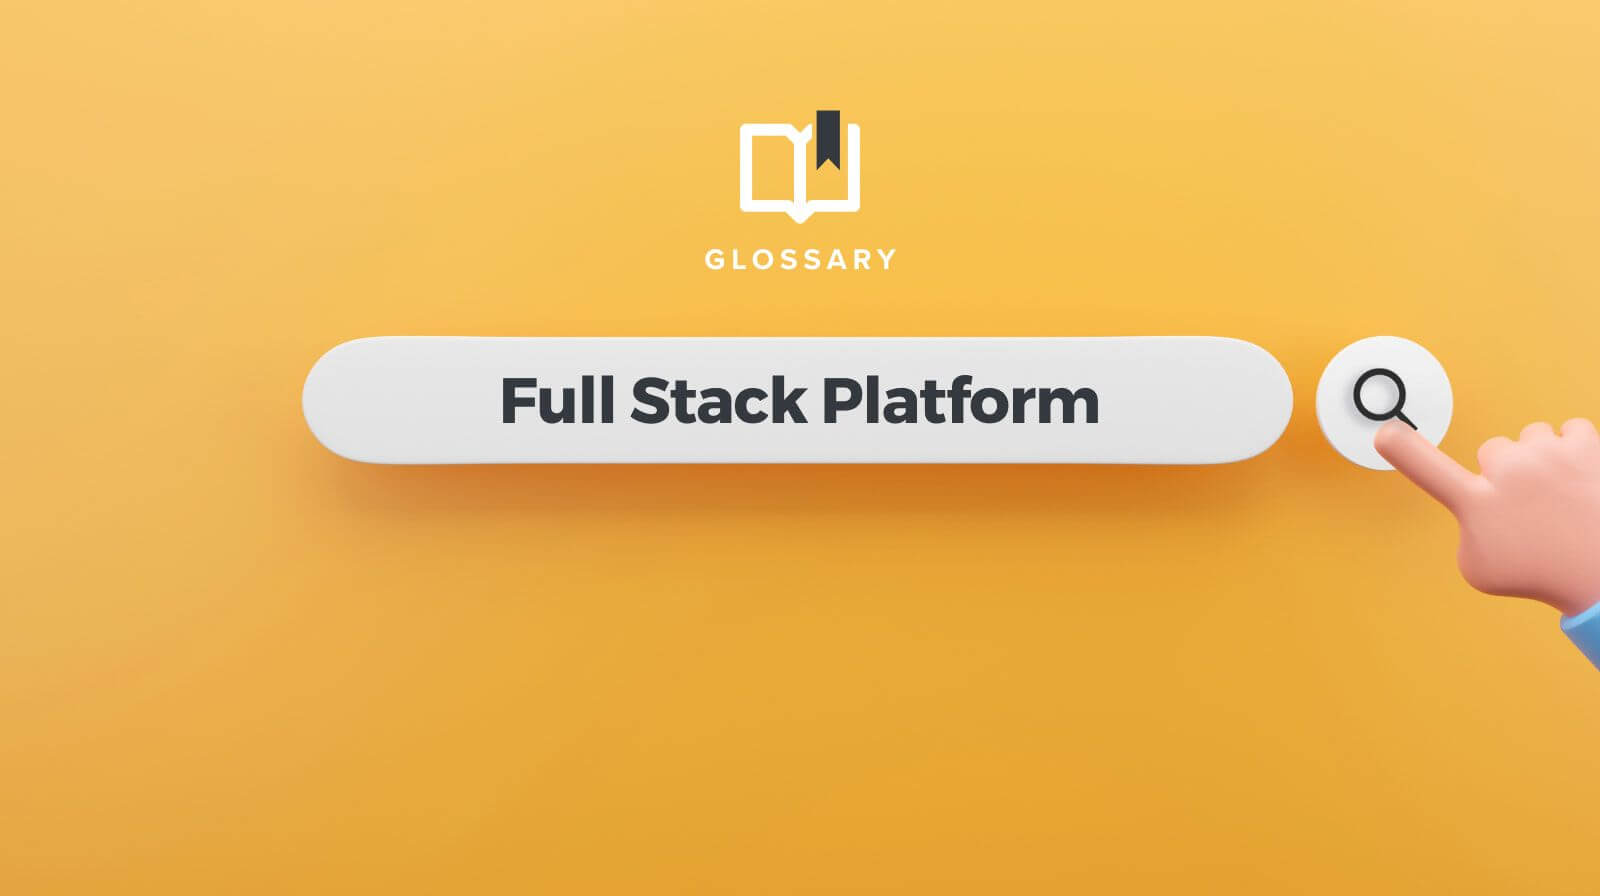 Qu'est ce qu'une Full Stack Platform ?